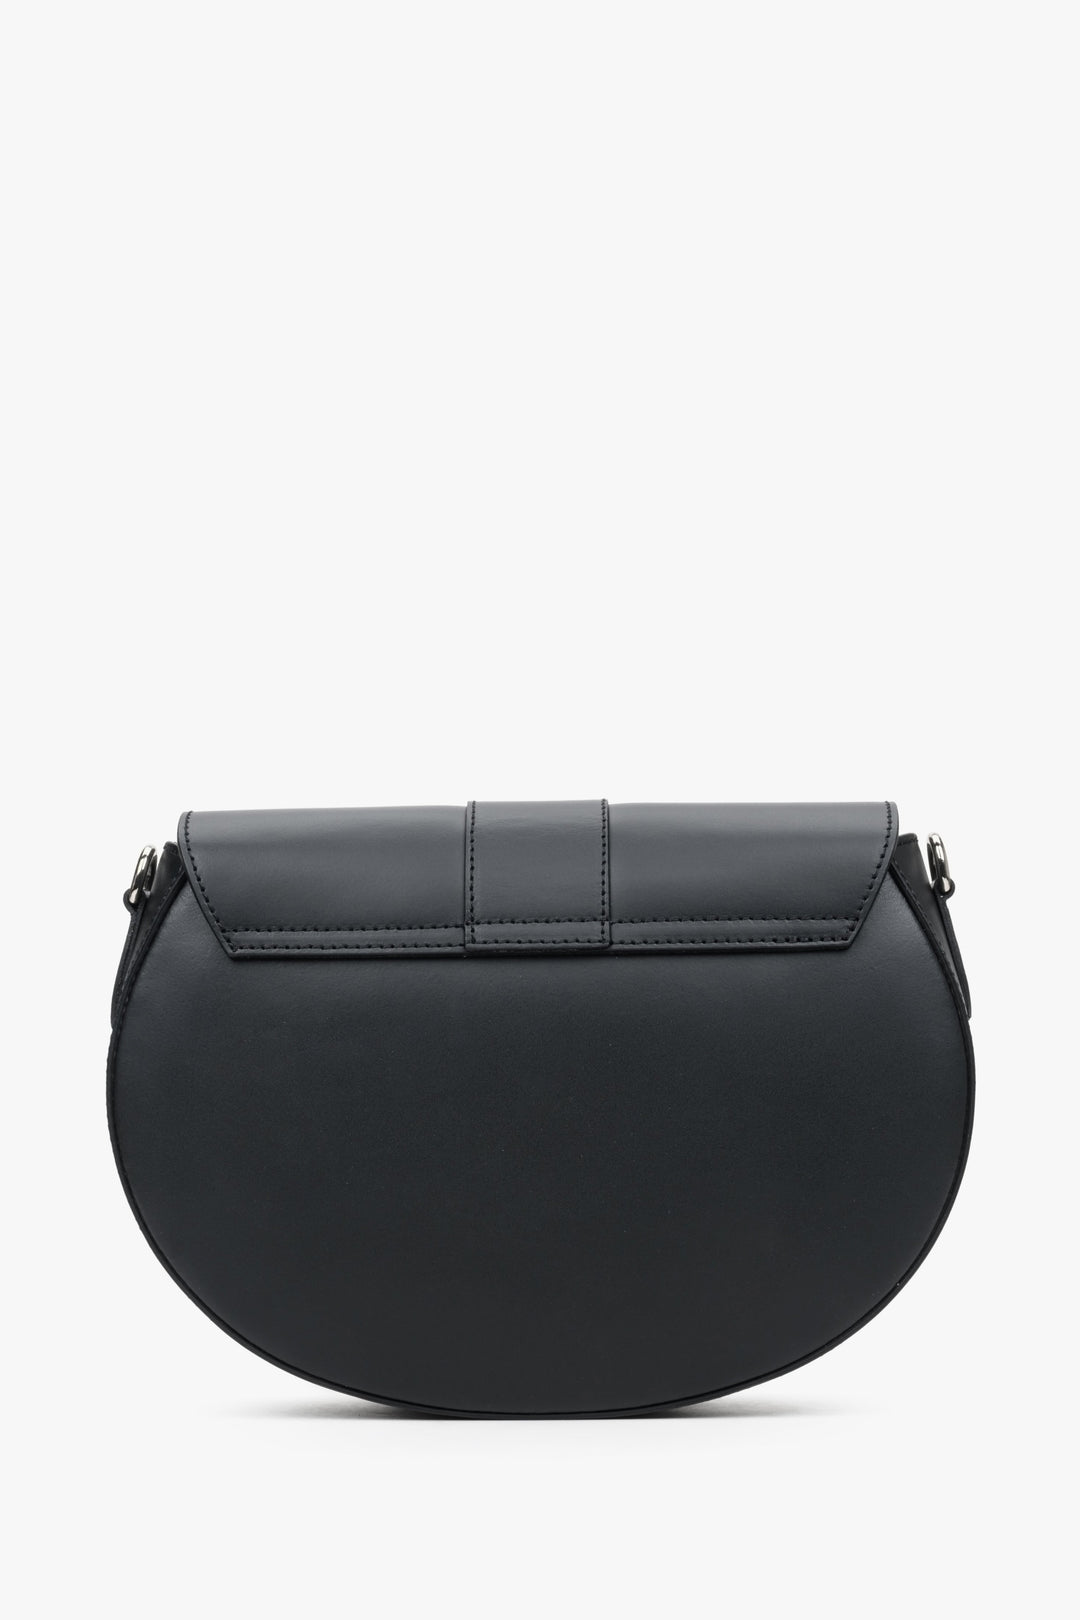 Women's black handbag made of genuine leather - reverse side.